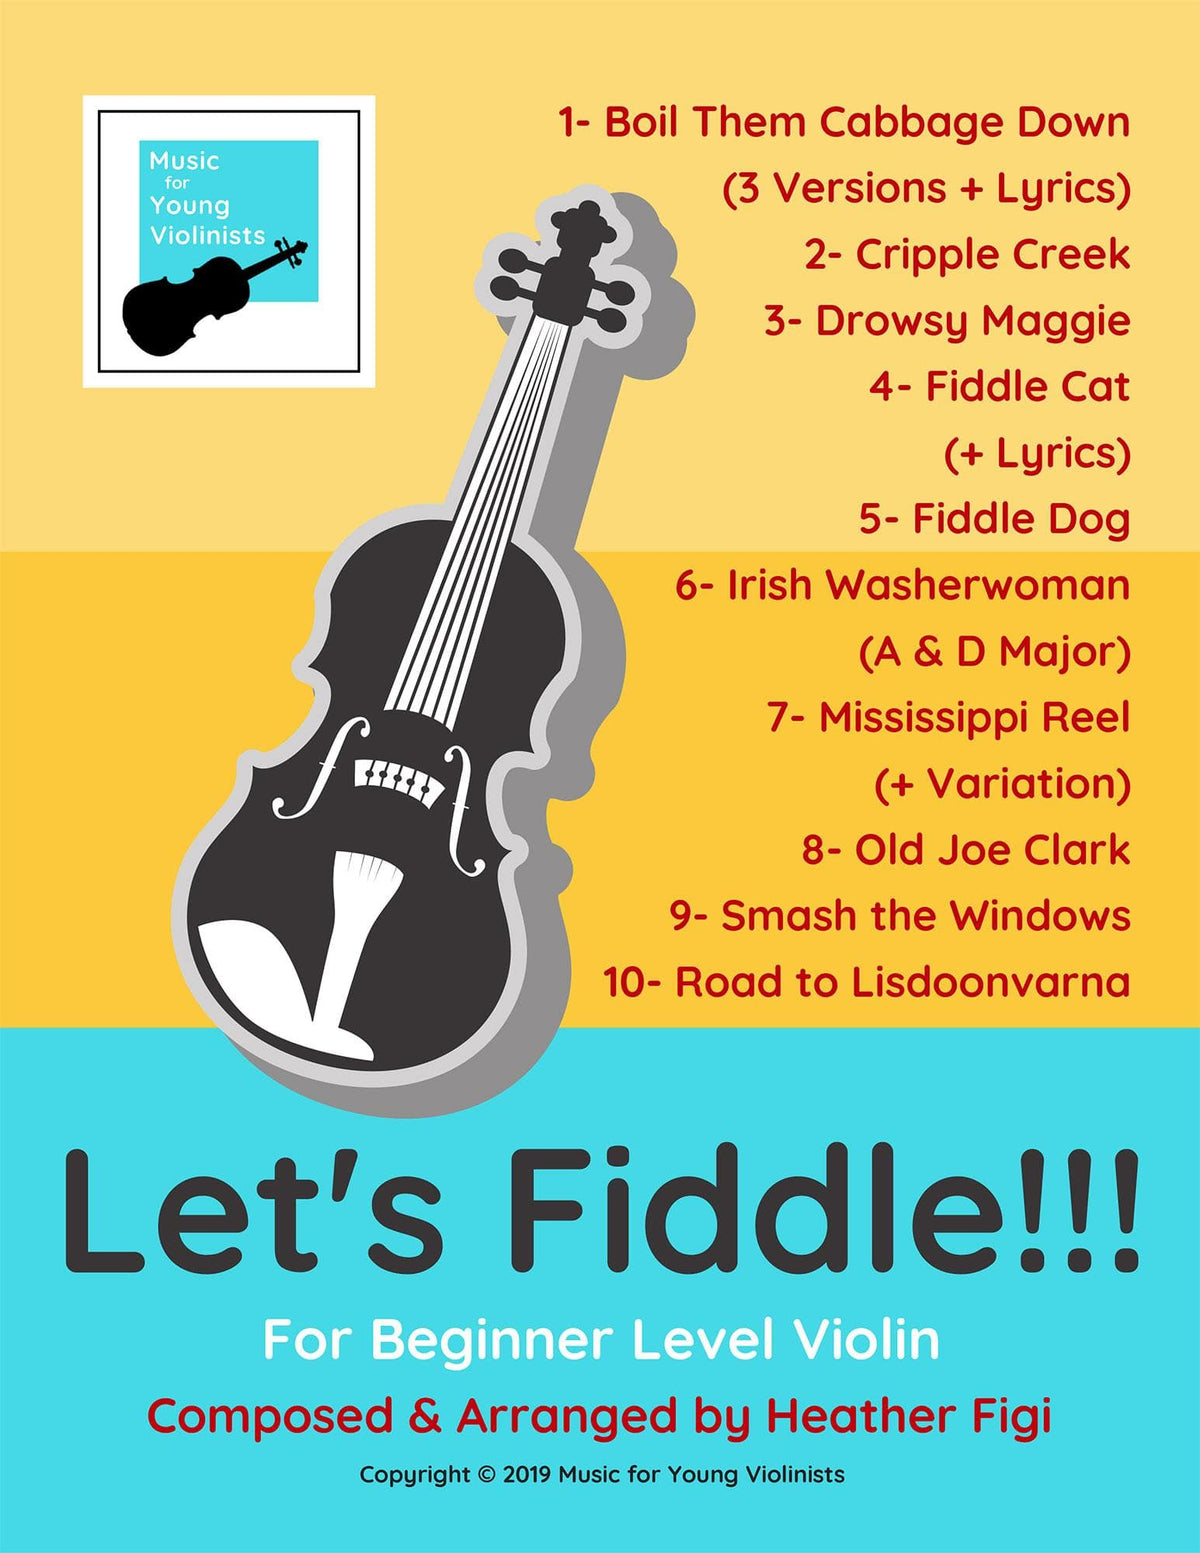 Figi, Heather - Music for Young Violinists: Let's Fiddle! - for Solo Violin - Digital Download